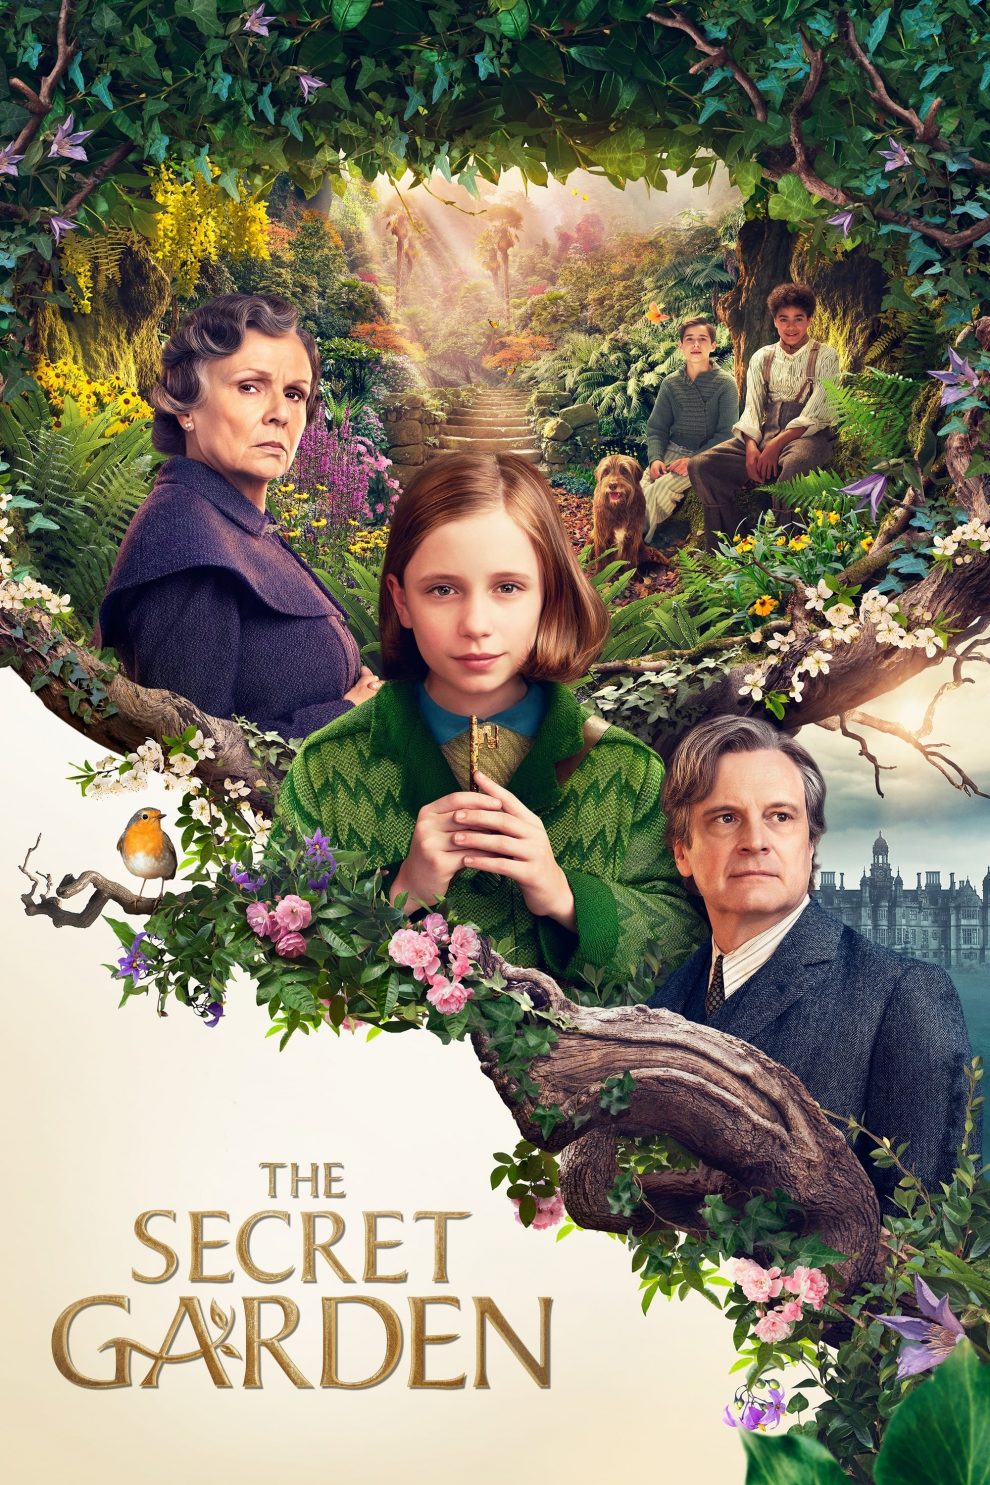 Poster for the movie "The Secret Garden"